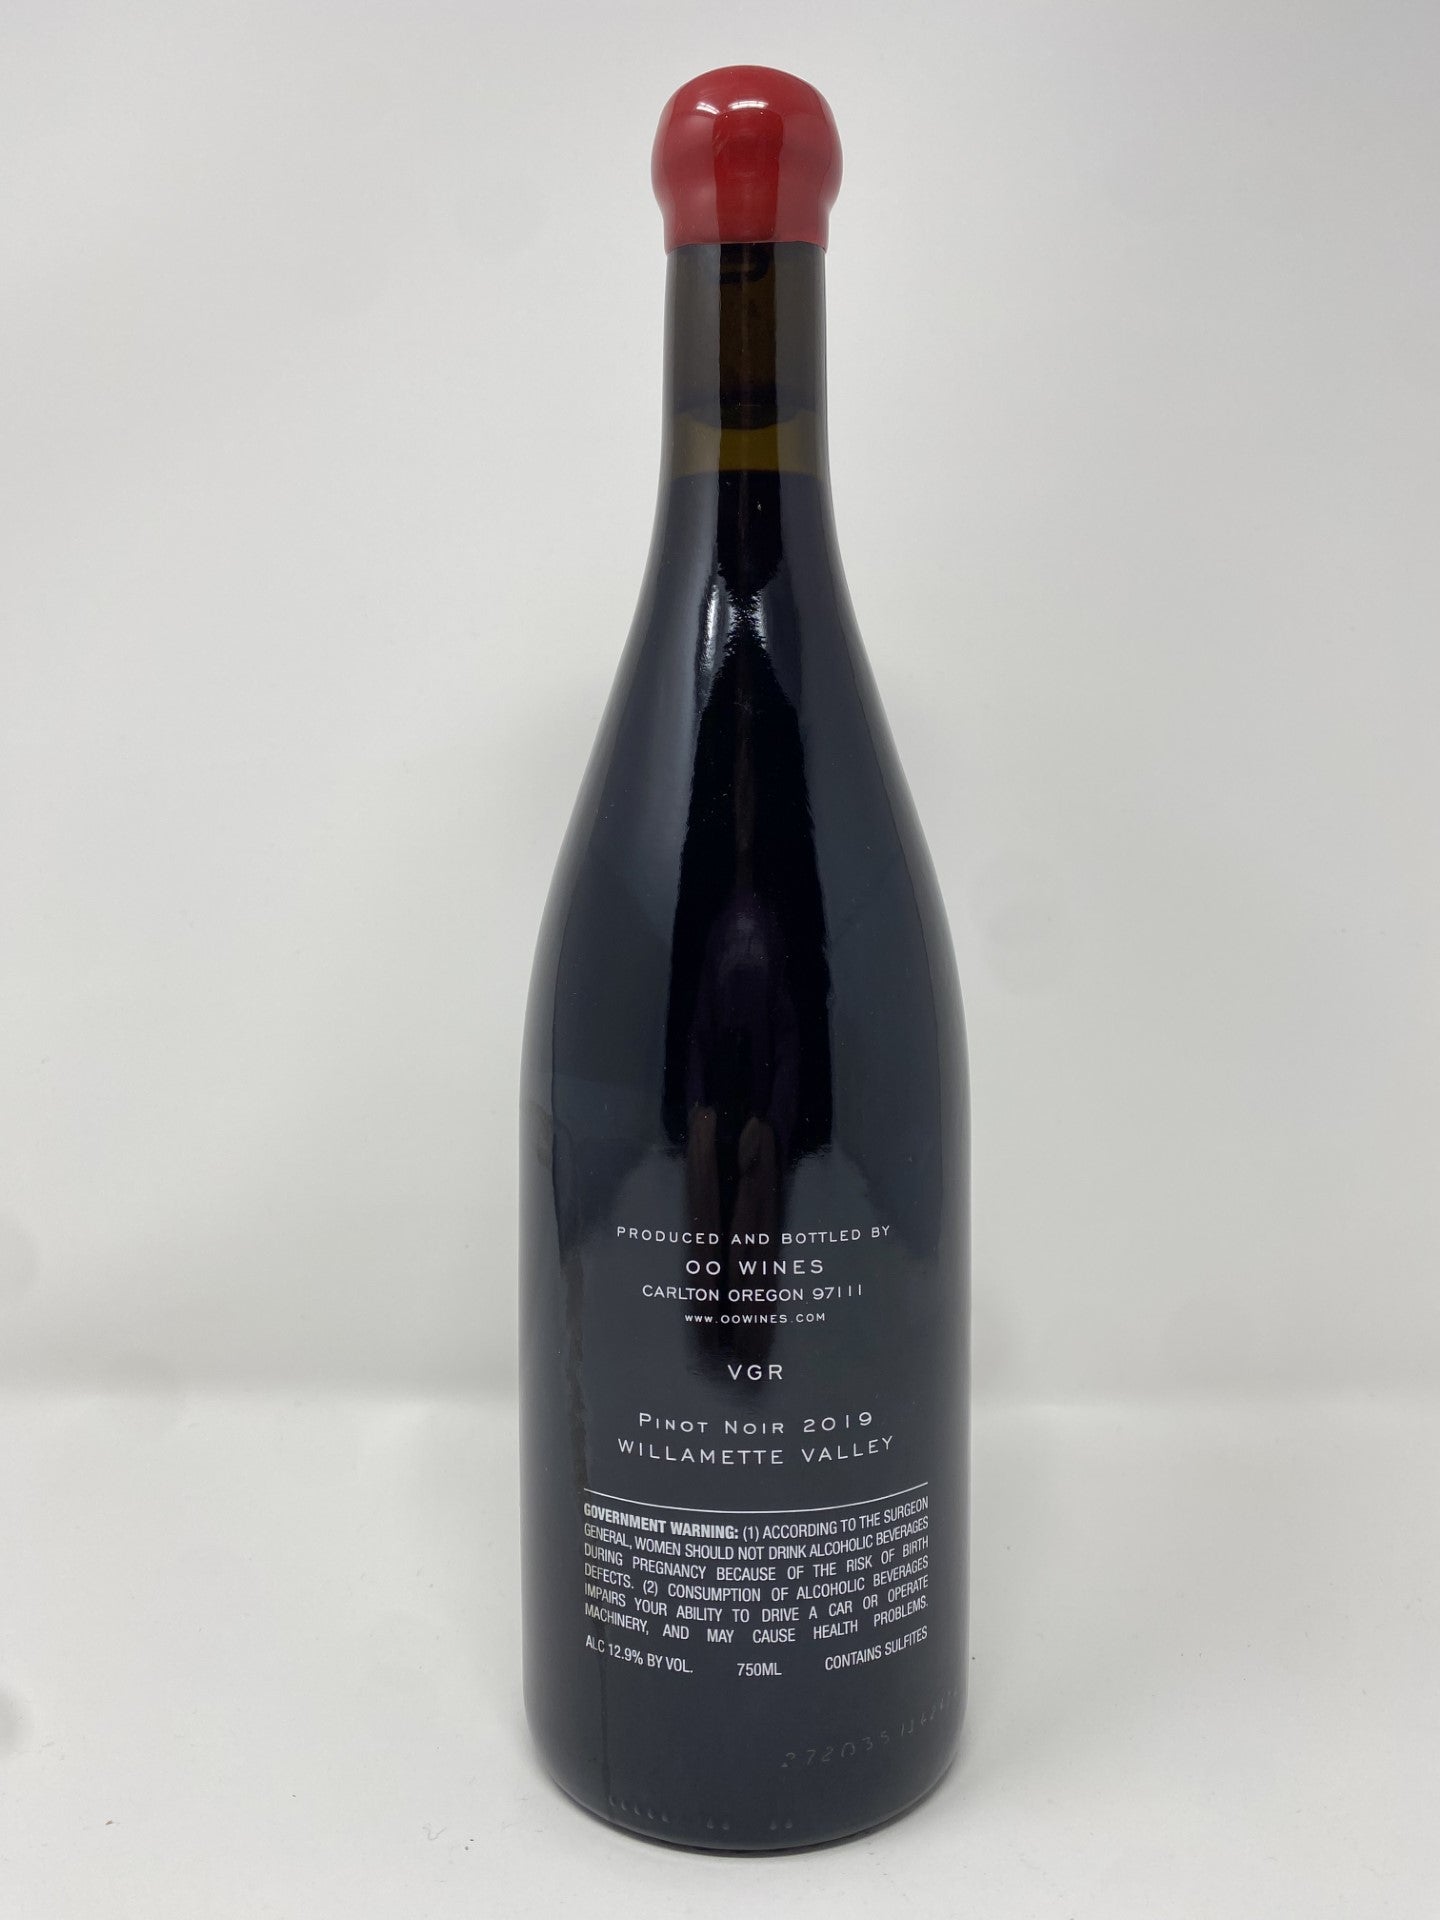 00 Wines Pinot Noir VGR 2019